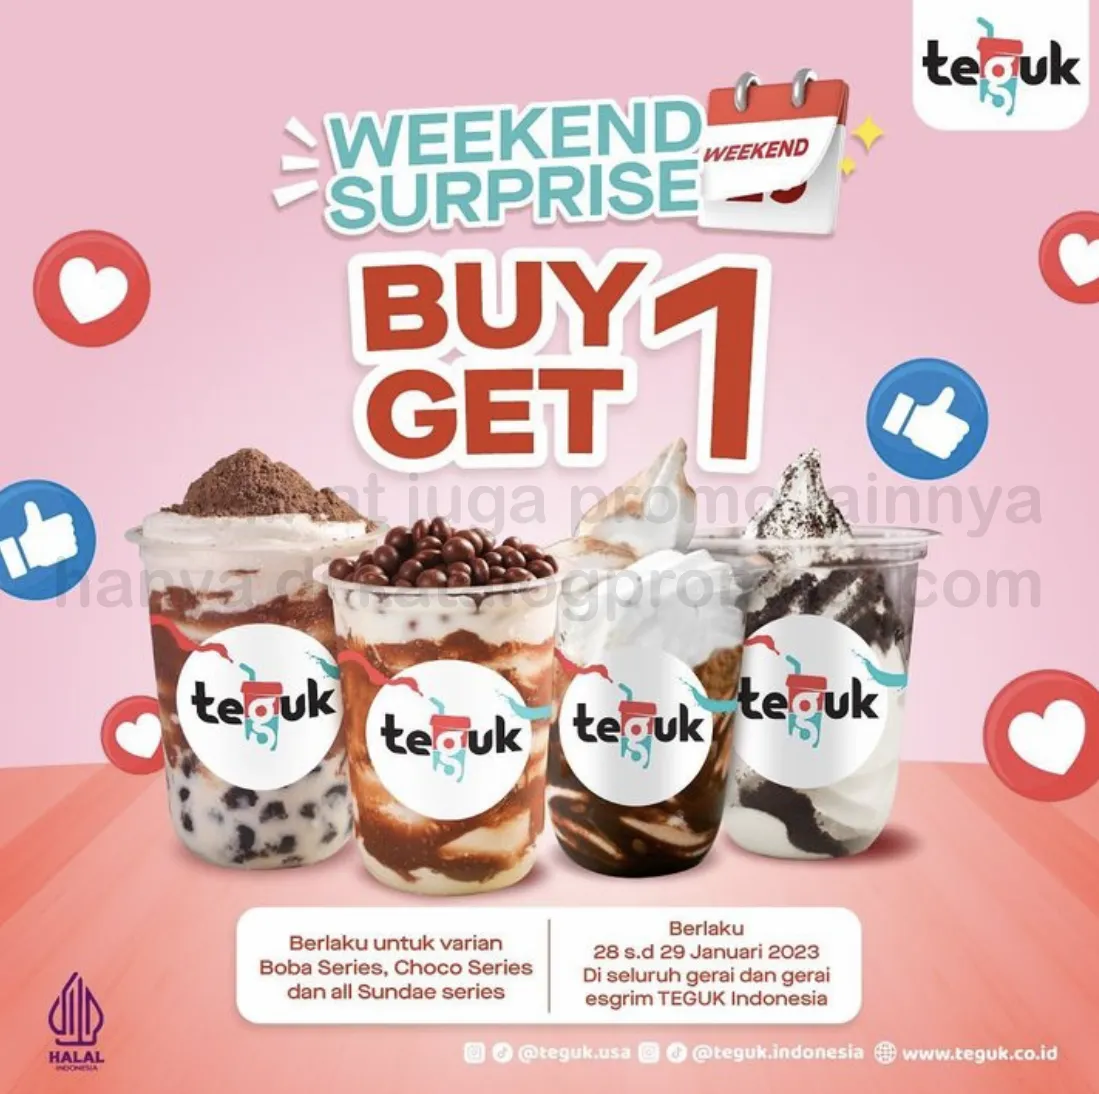 Promo TEGUK Weekend Surprise - Buy 1 Get 1 FREE